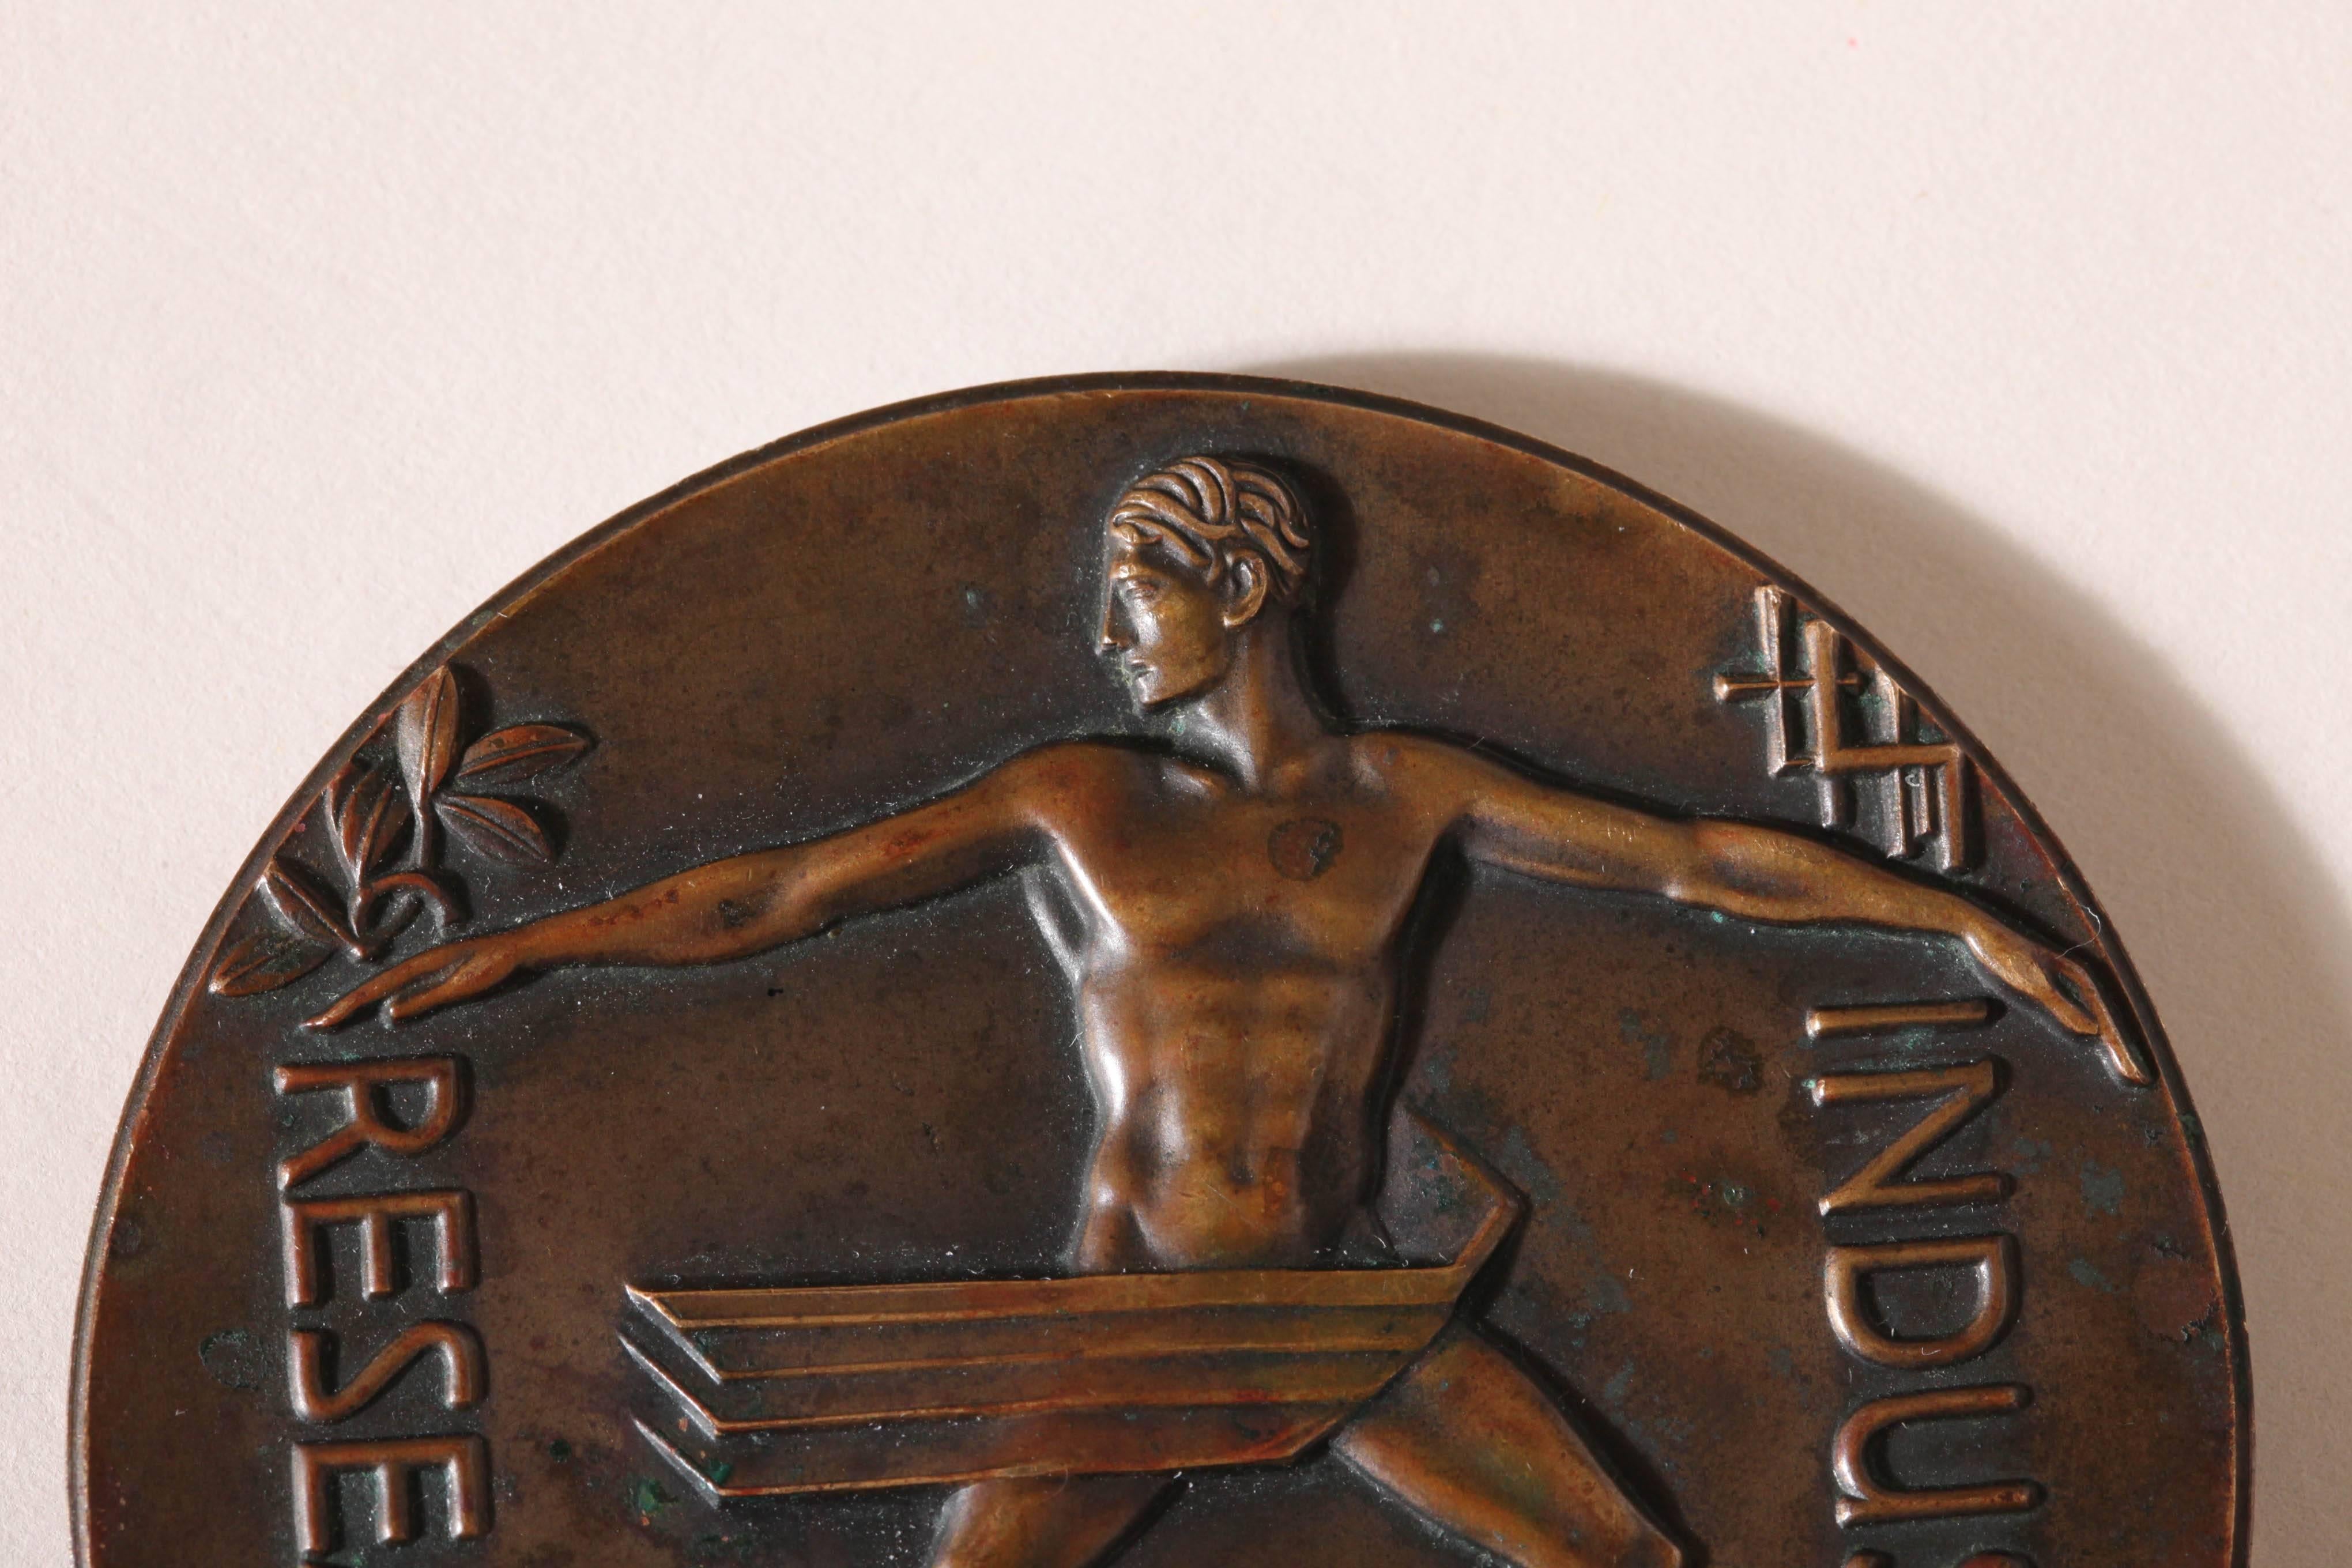 Bronze American Art Deco Medal Commemorating Century of Progress International Expo